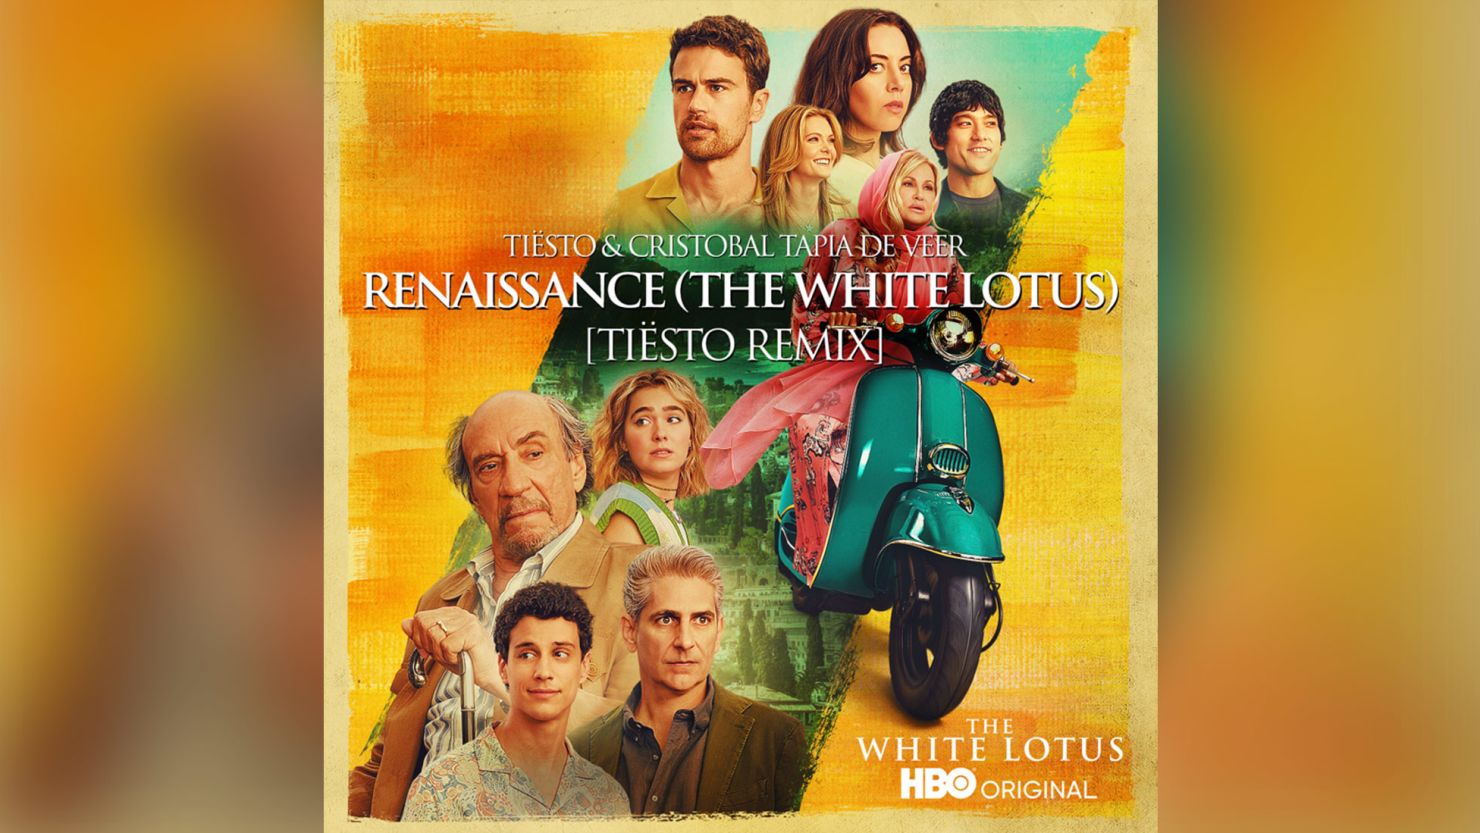 Album art for Tiesto's "White Lotus" remix